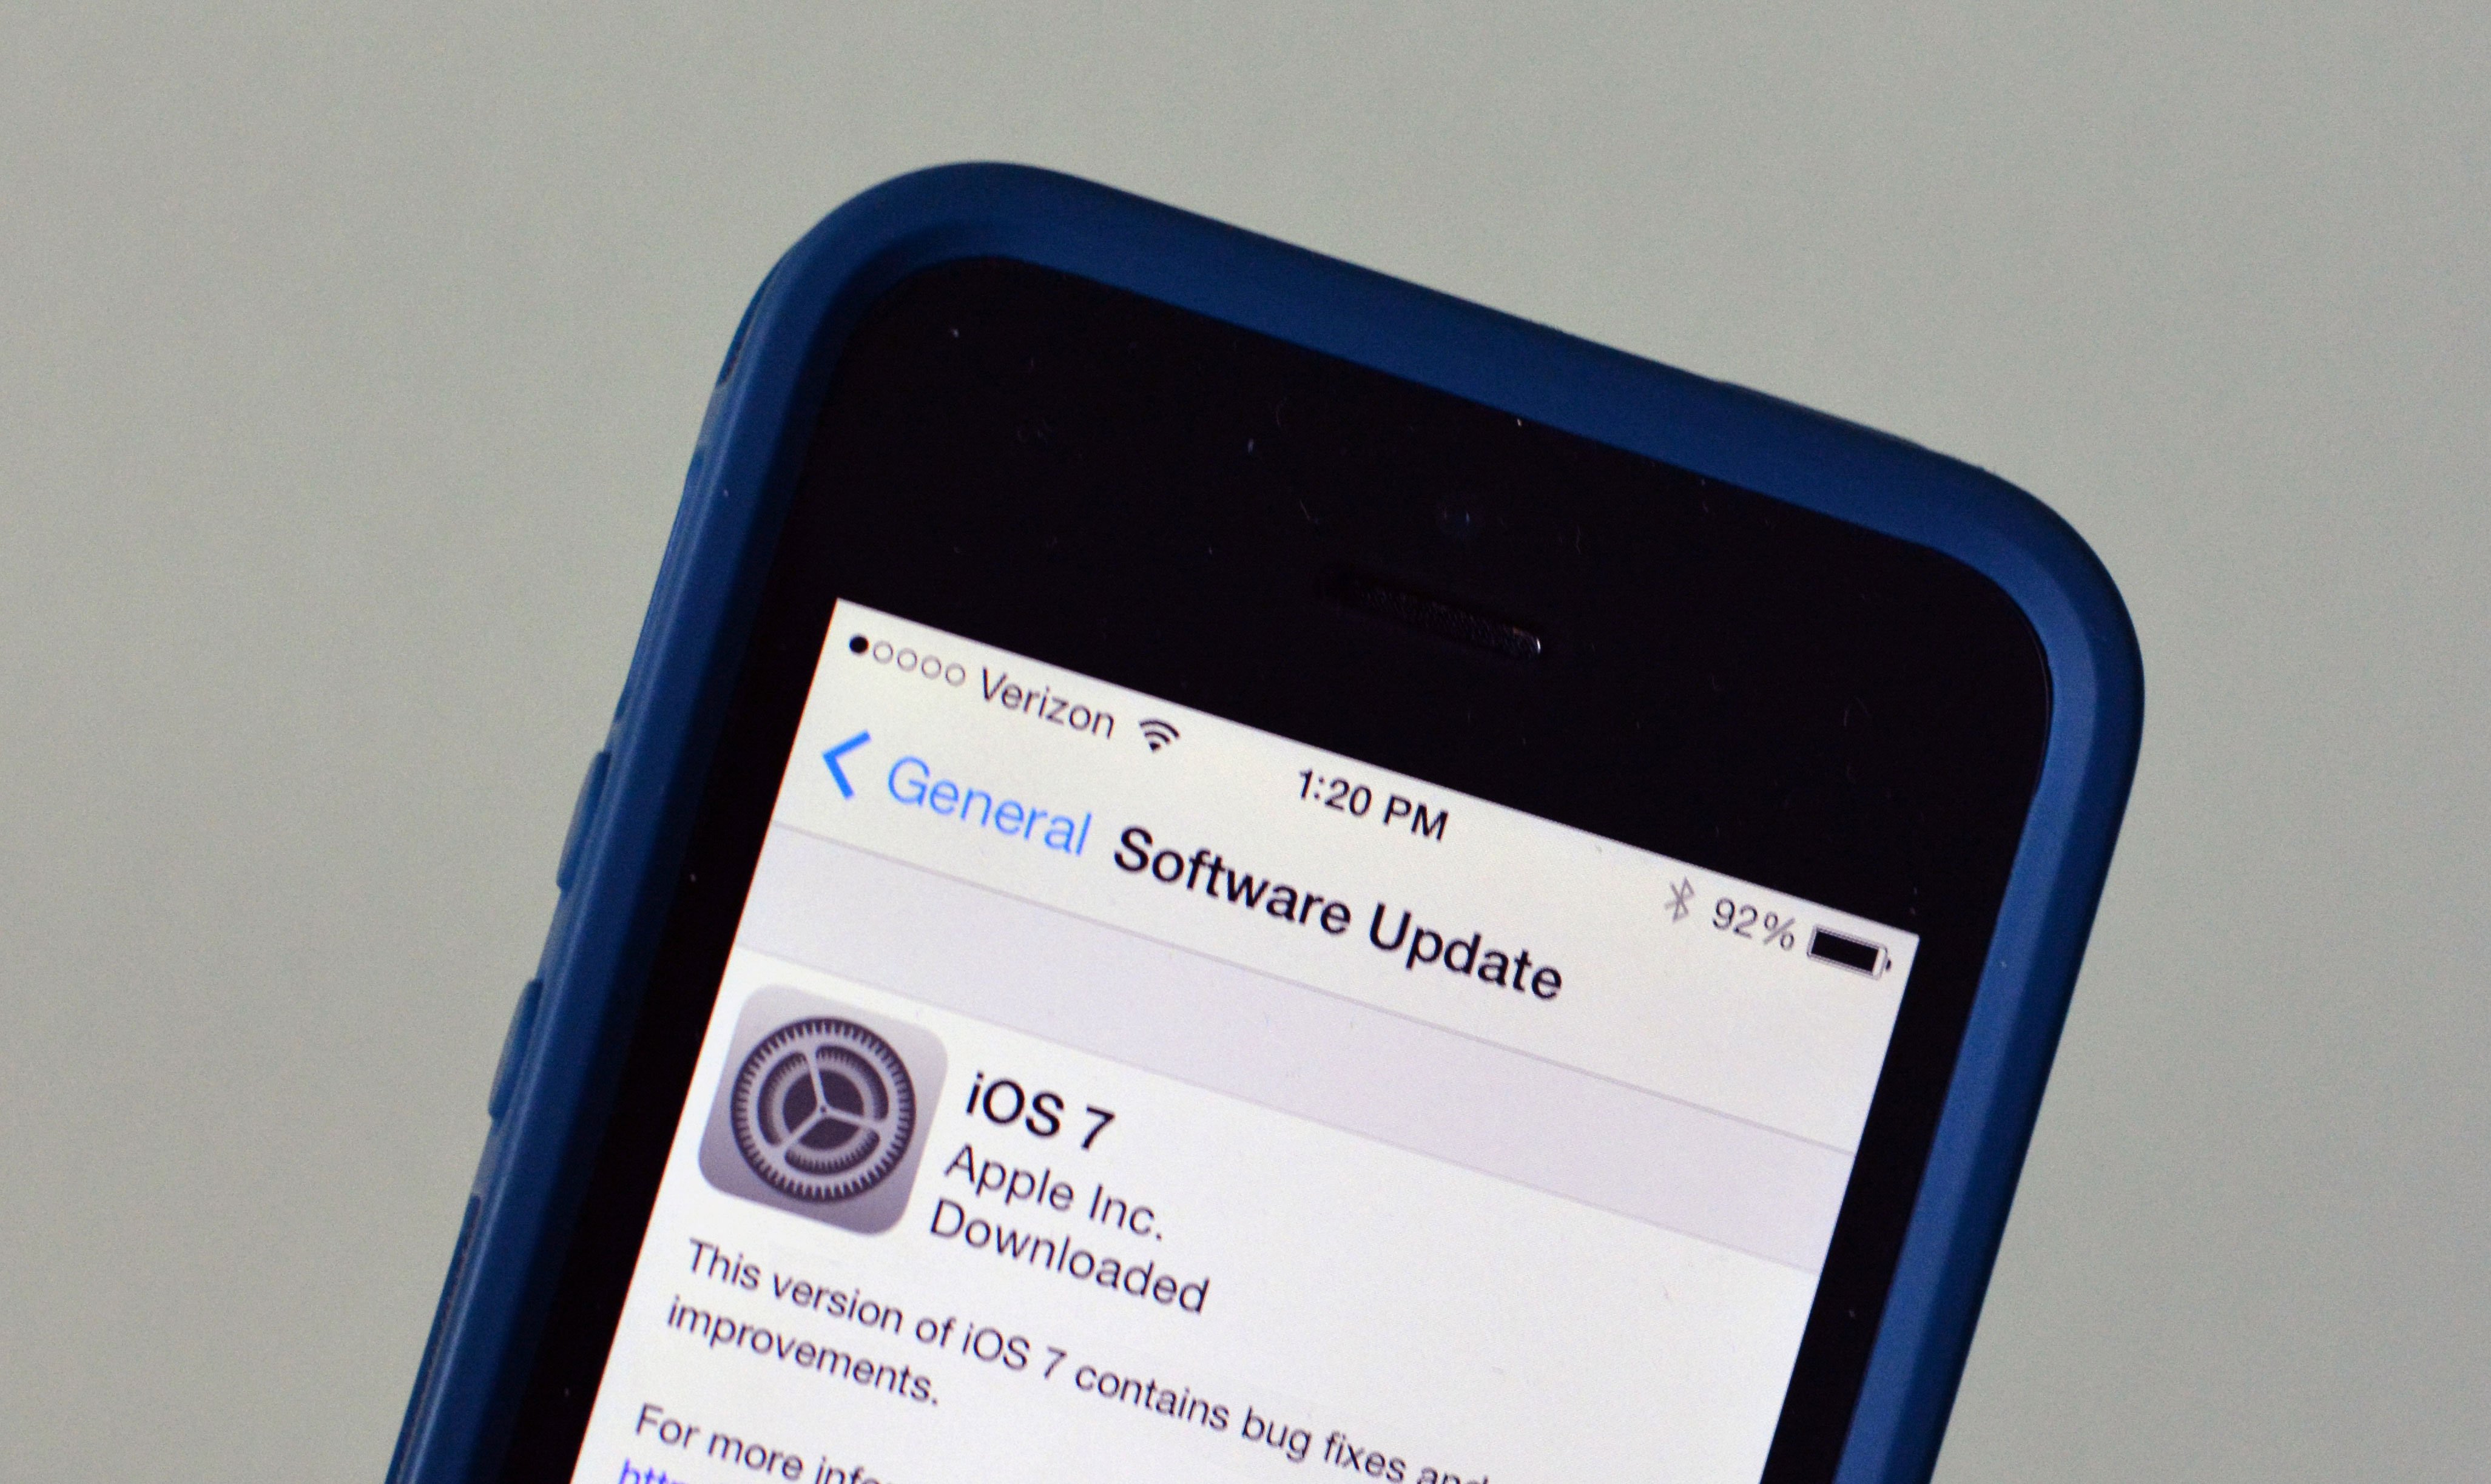 Install the iOS 7 upgrade.